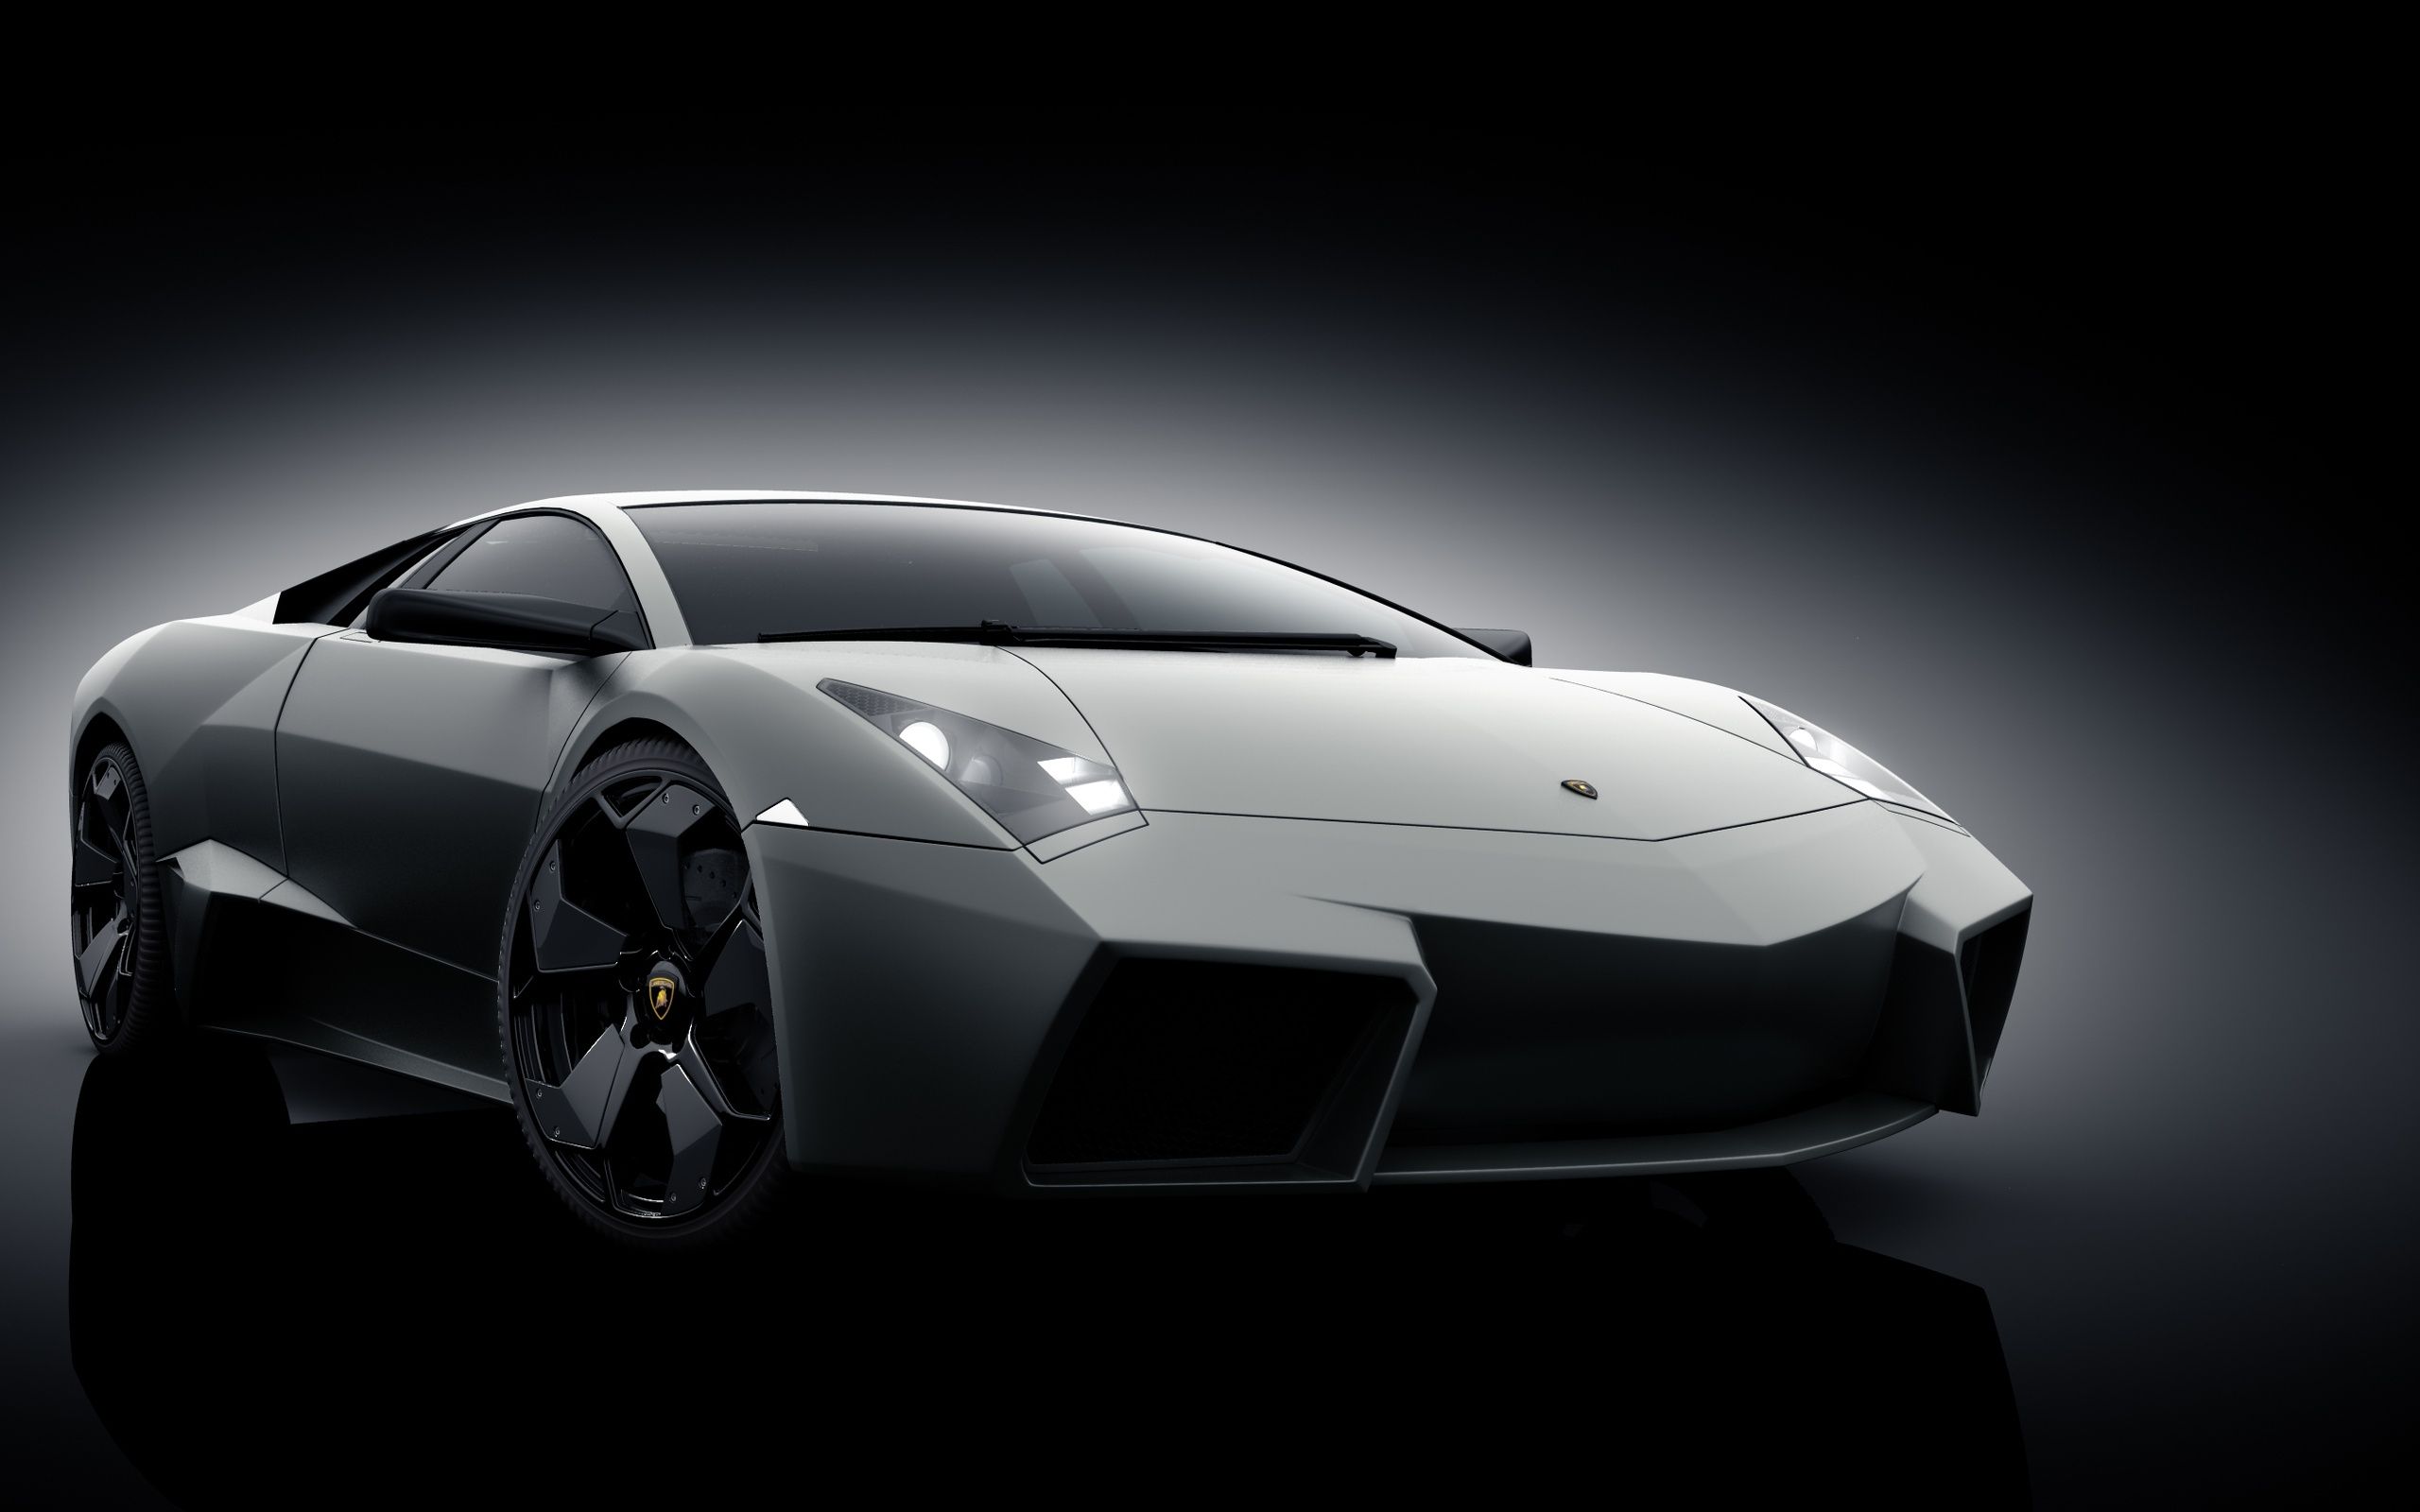 The Amazing Lamborghini Wallpapers HD Backgrounds